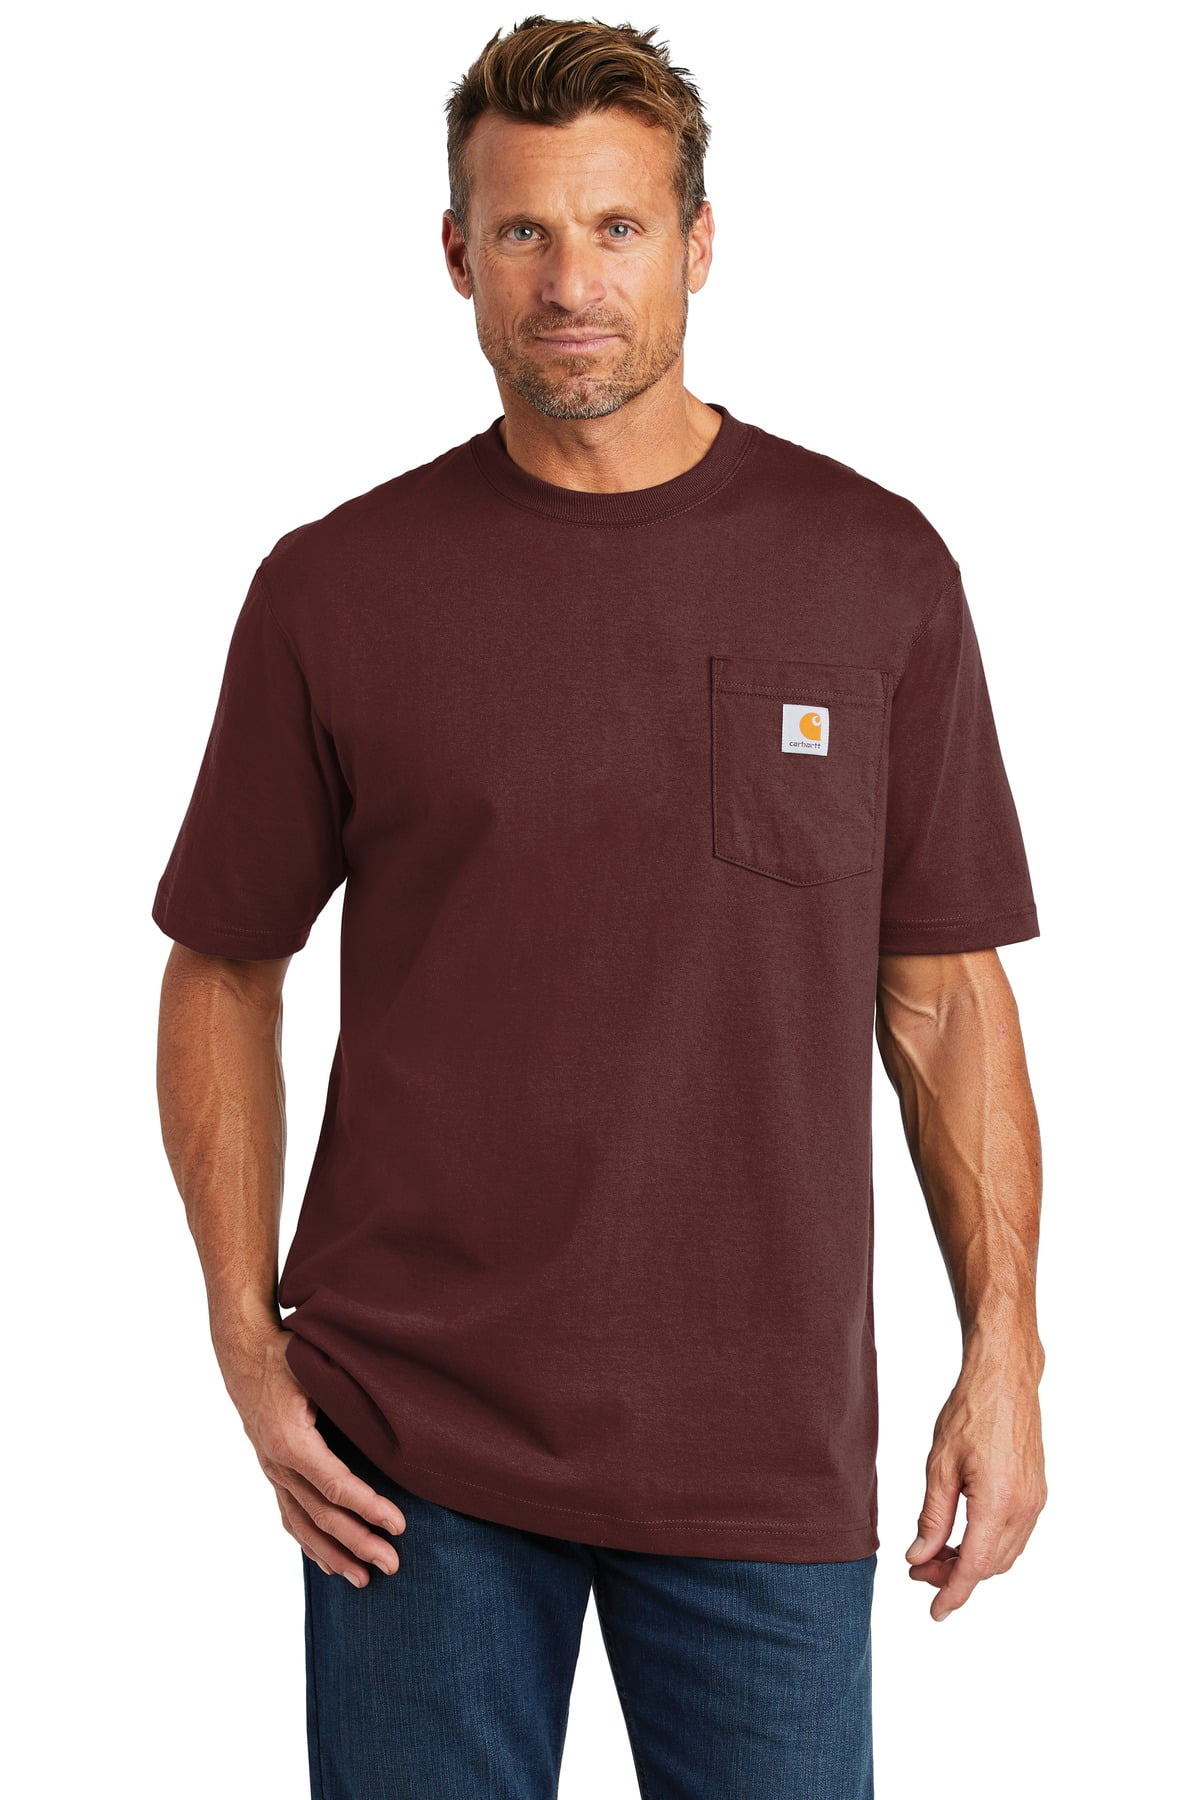 Carhartt Men's Workwear Pocket Short Sleeve T-Shirt - CTK87 - Walmart.com